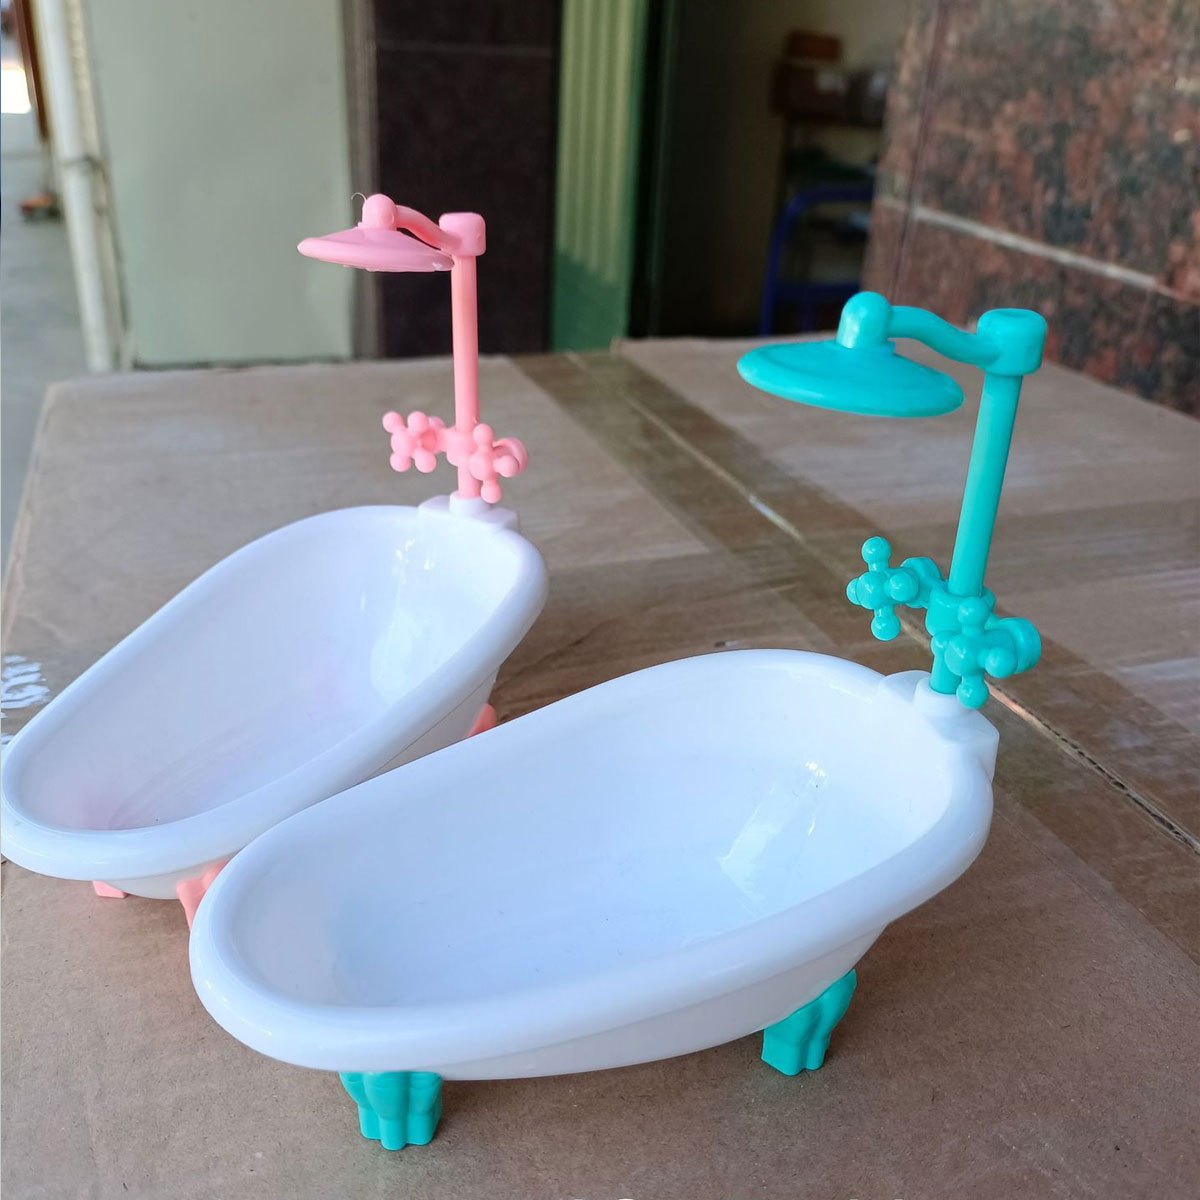 Dollhouse Dollhouse Miniature Bathroom Set Kids Pretend Play Toy